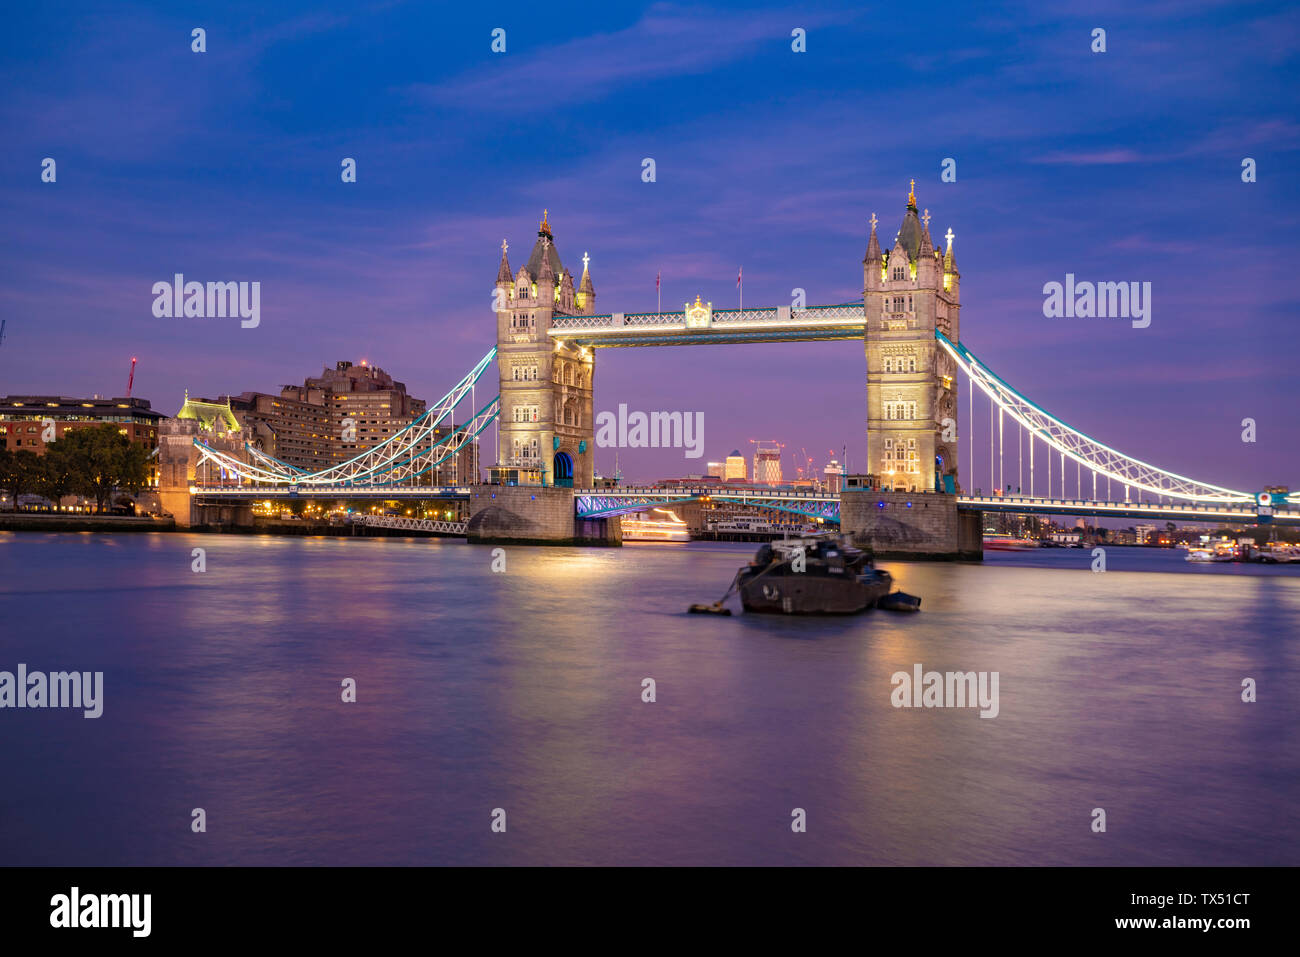 UK, London, illuminated Tower Bridge at night Stock Photo